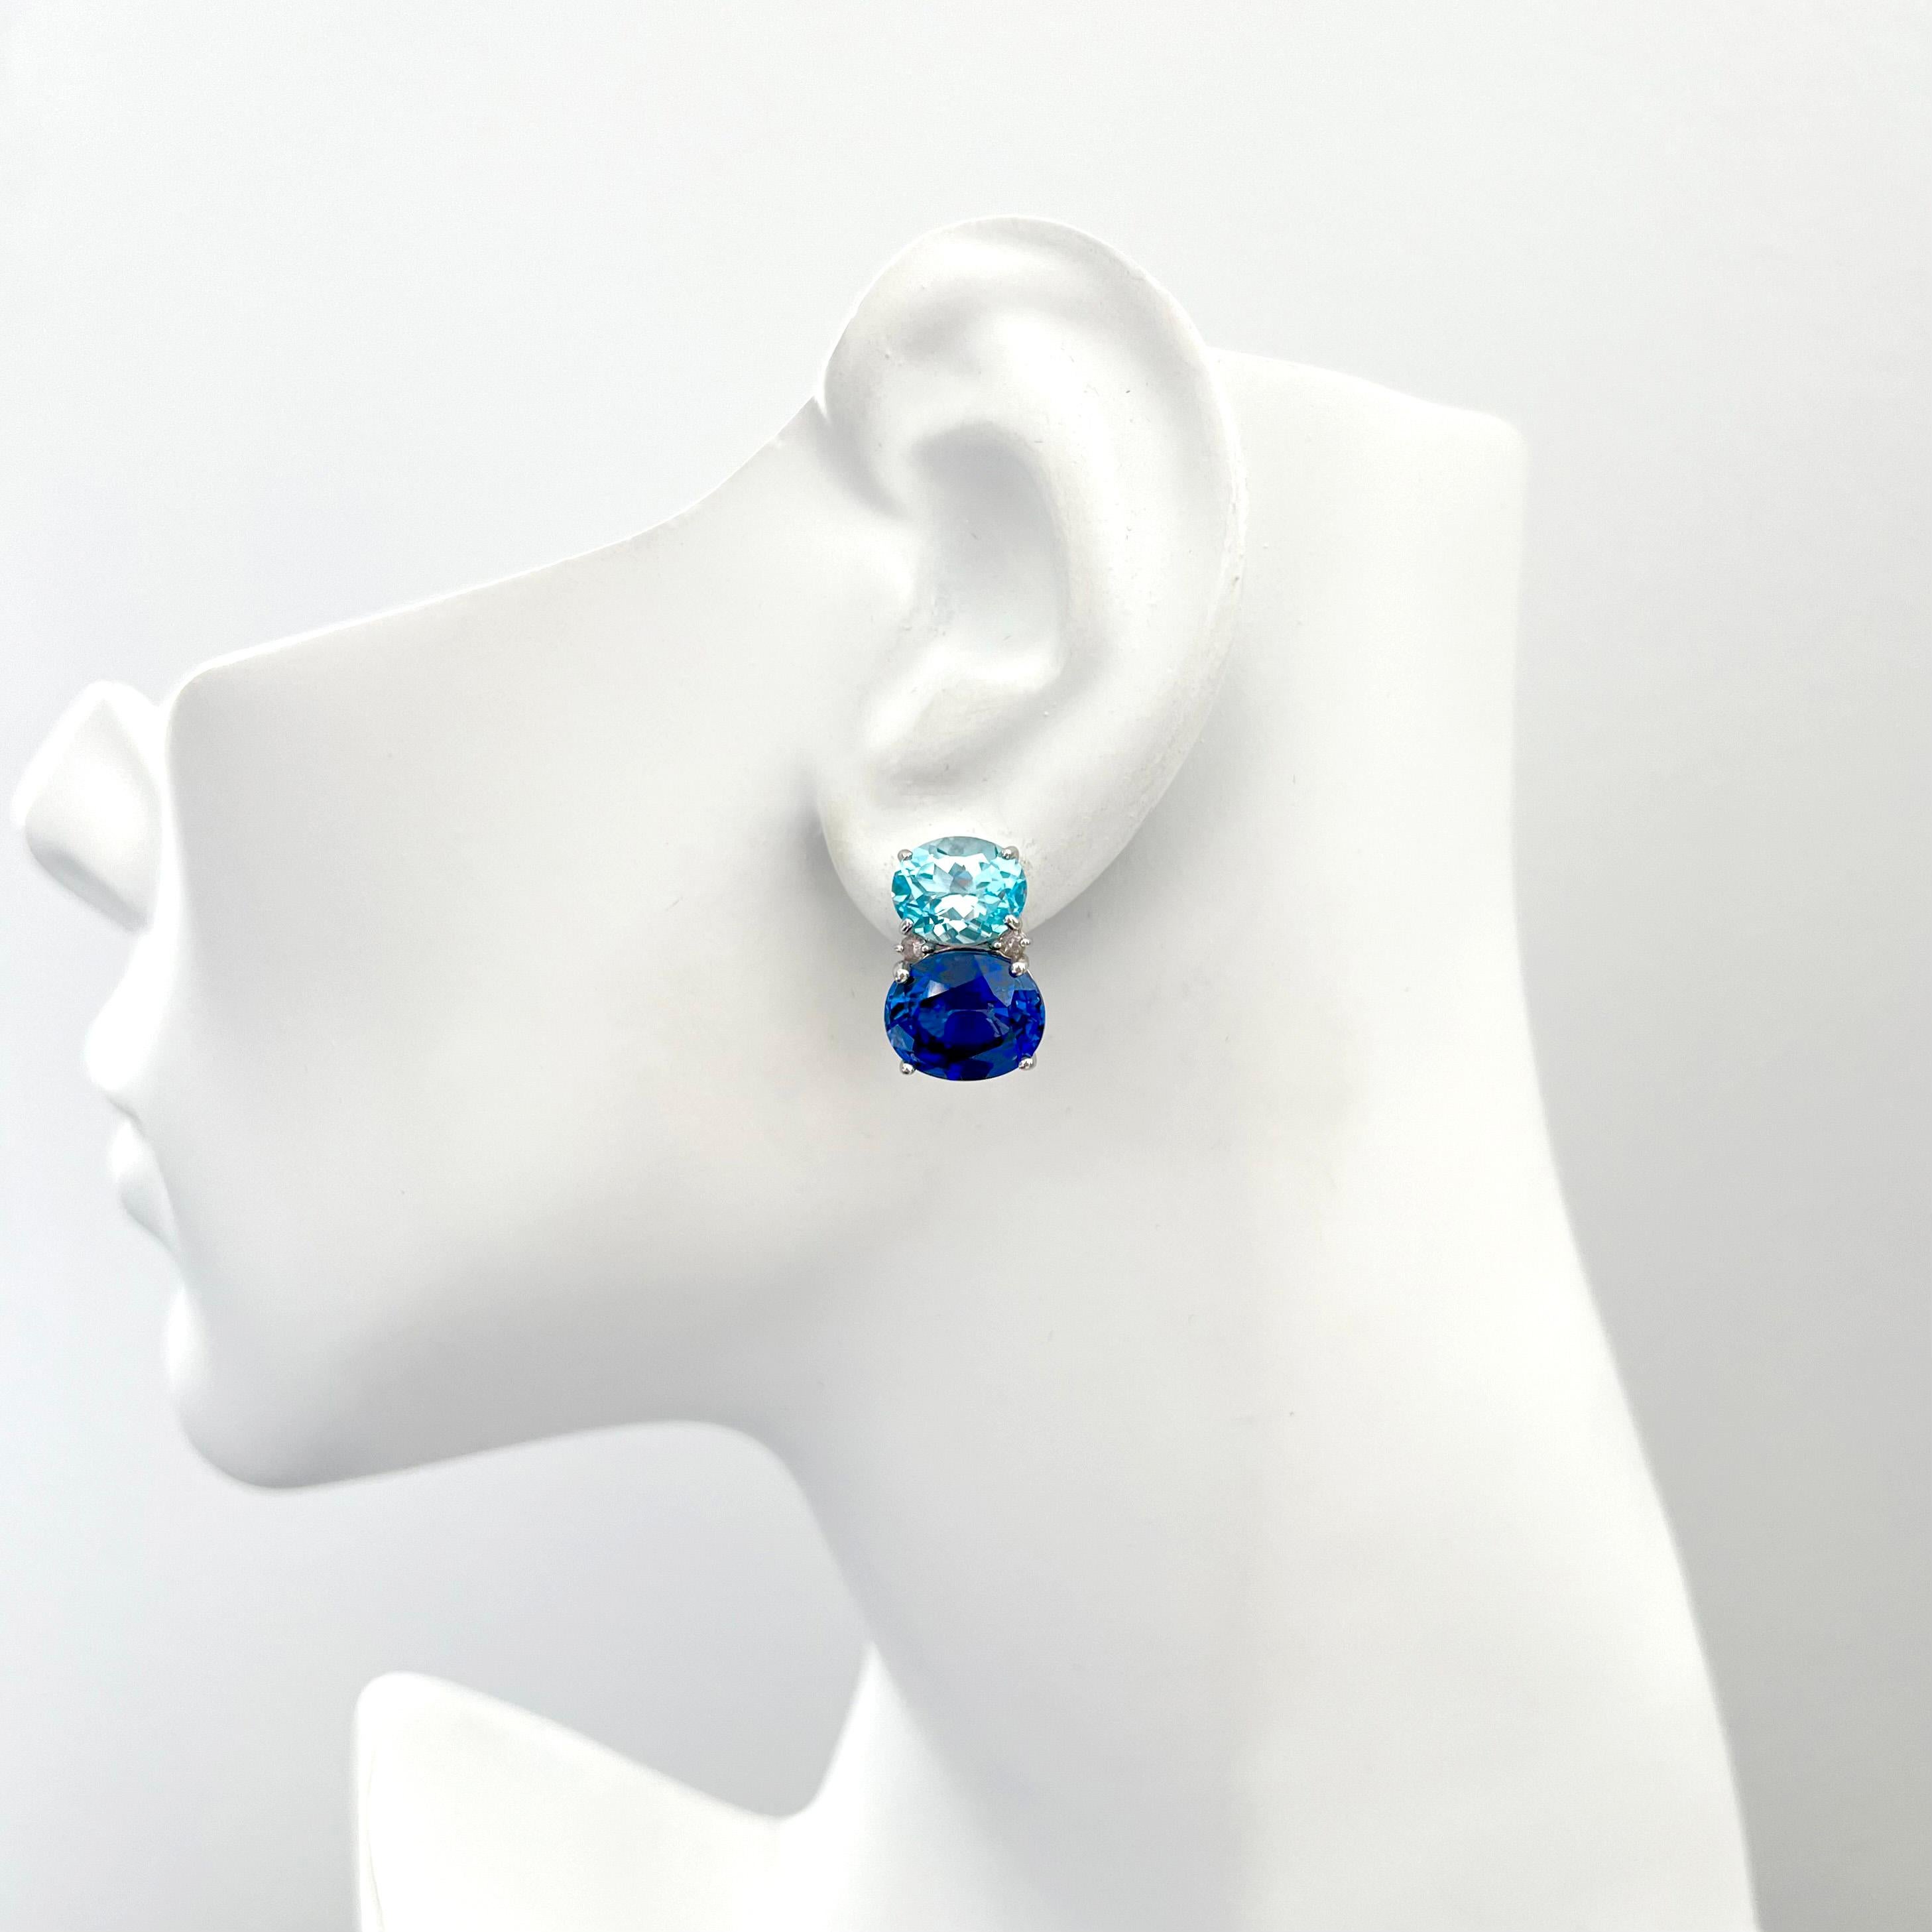 Atemberaubende doppelte ovale blaue Topas- und Saphir-Ohrringe im Angebot 1